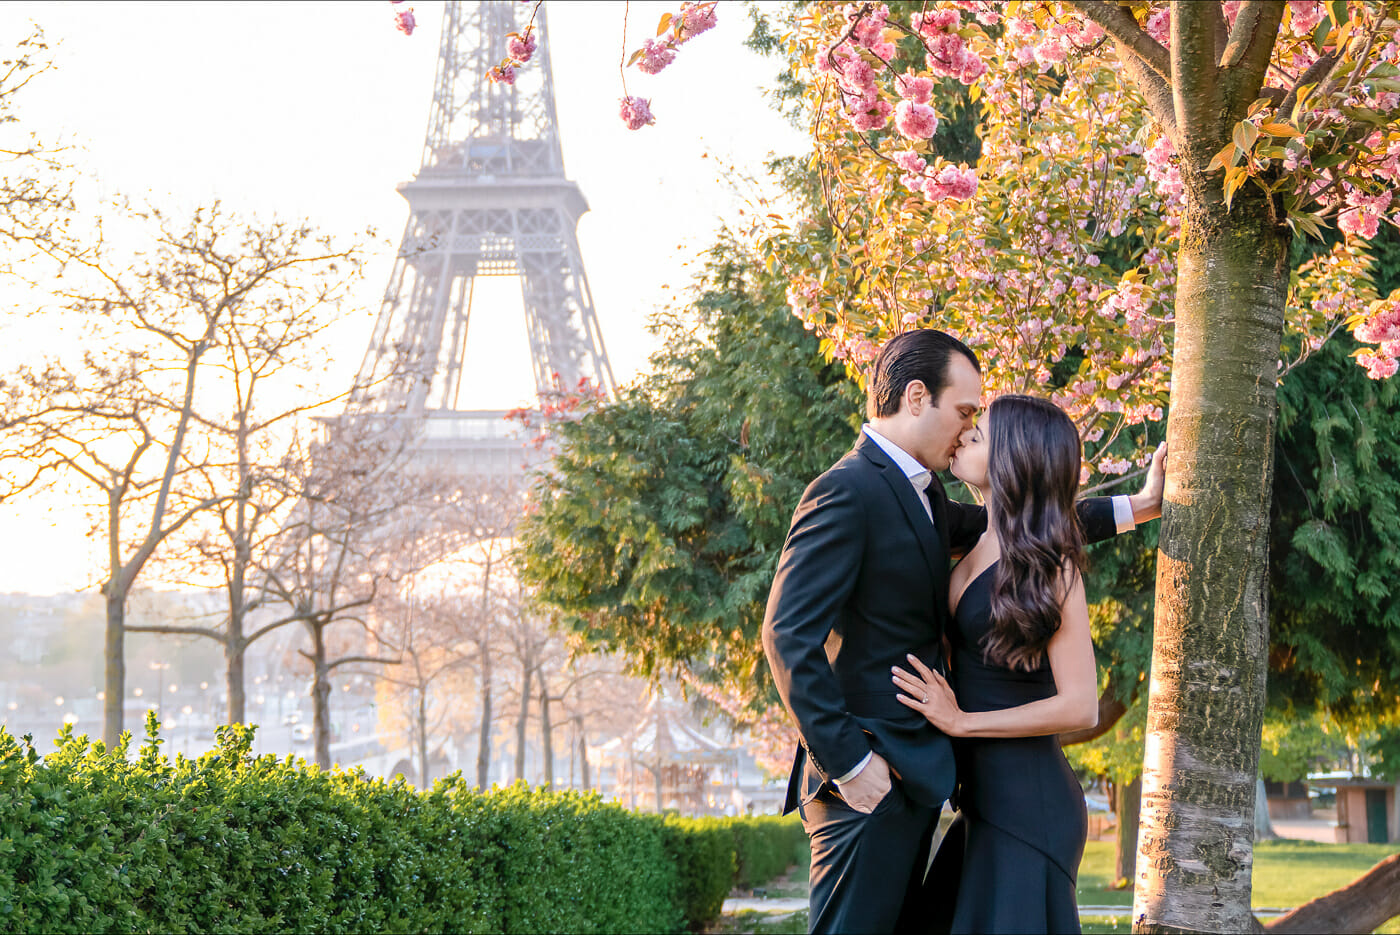 Most romantic places in Paris to kiss.